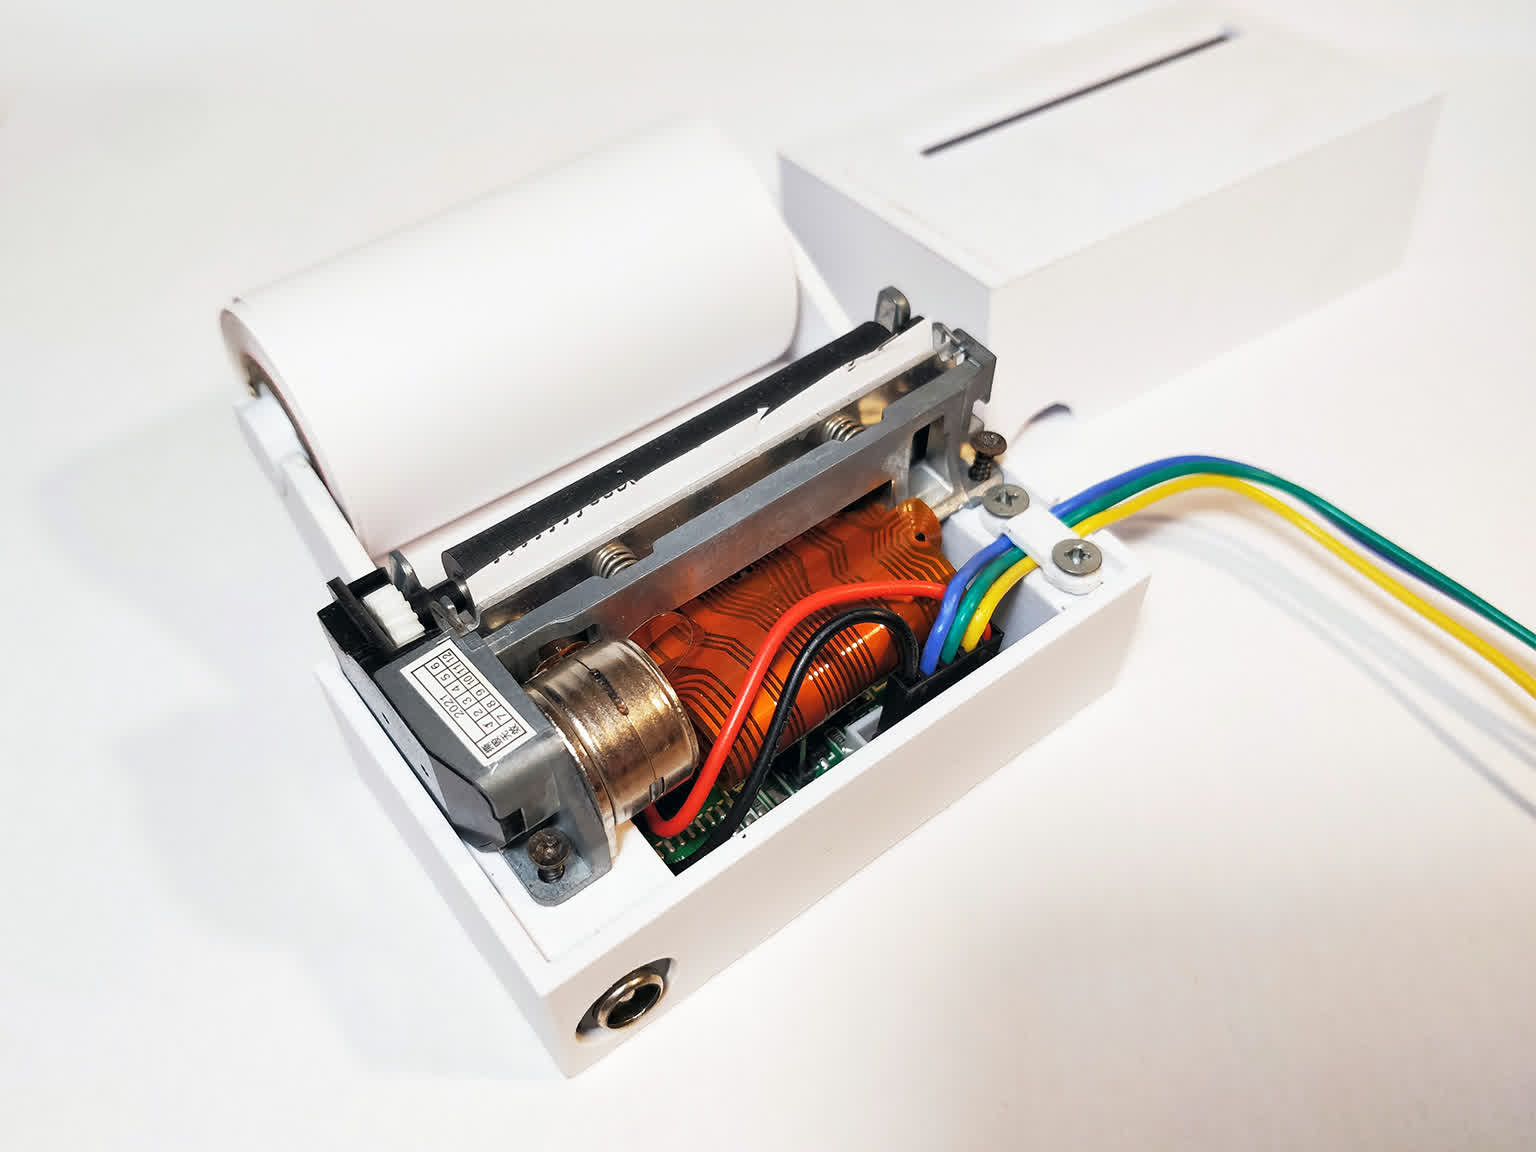 image of final thermal printer